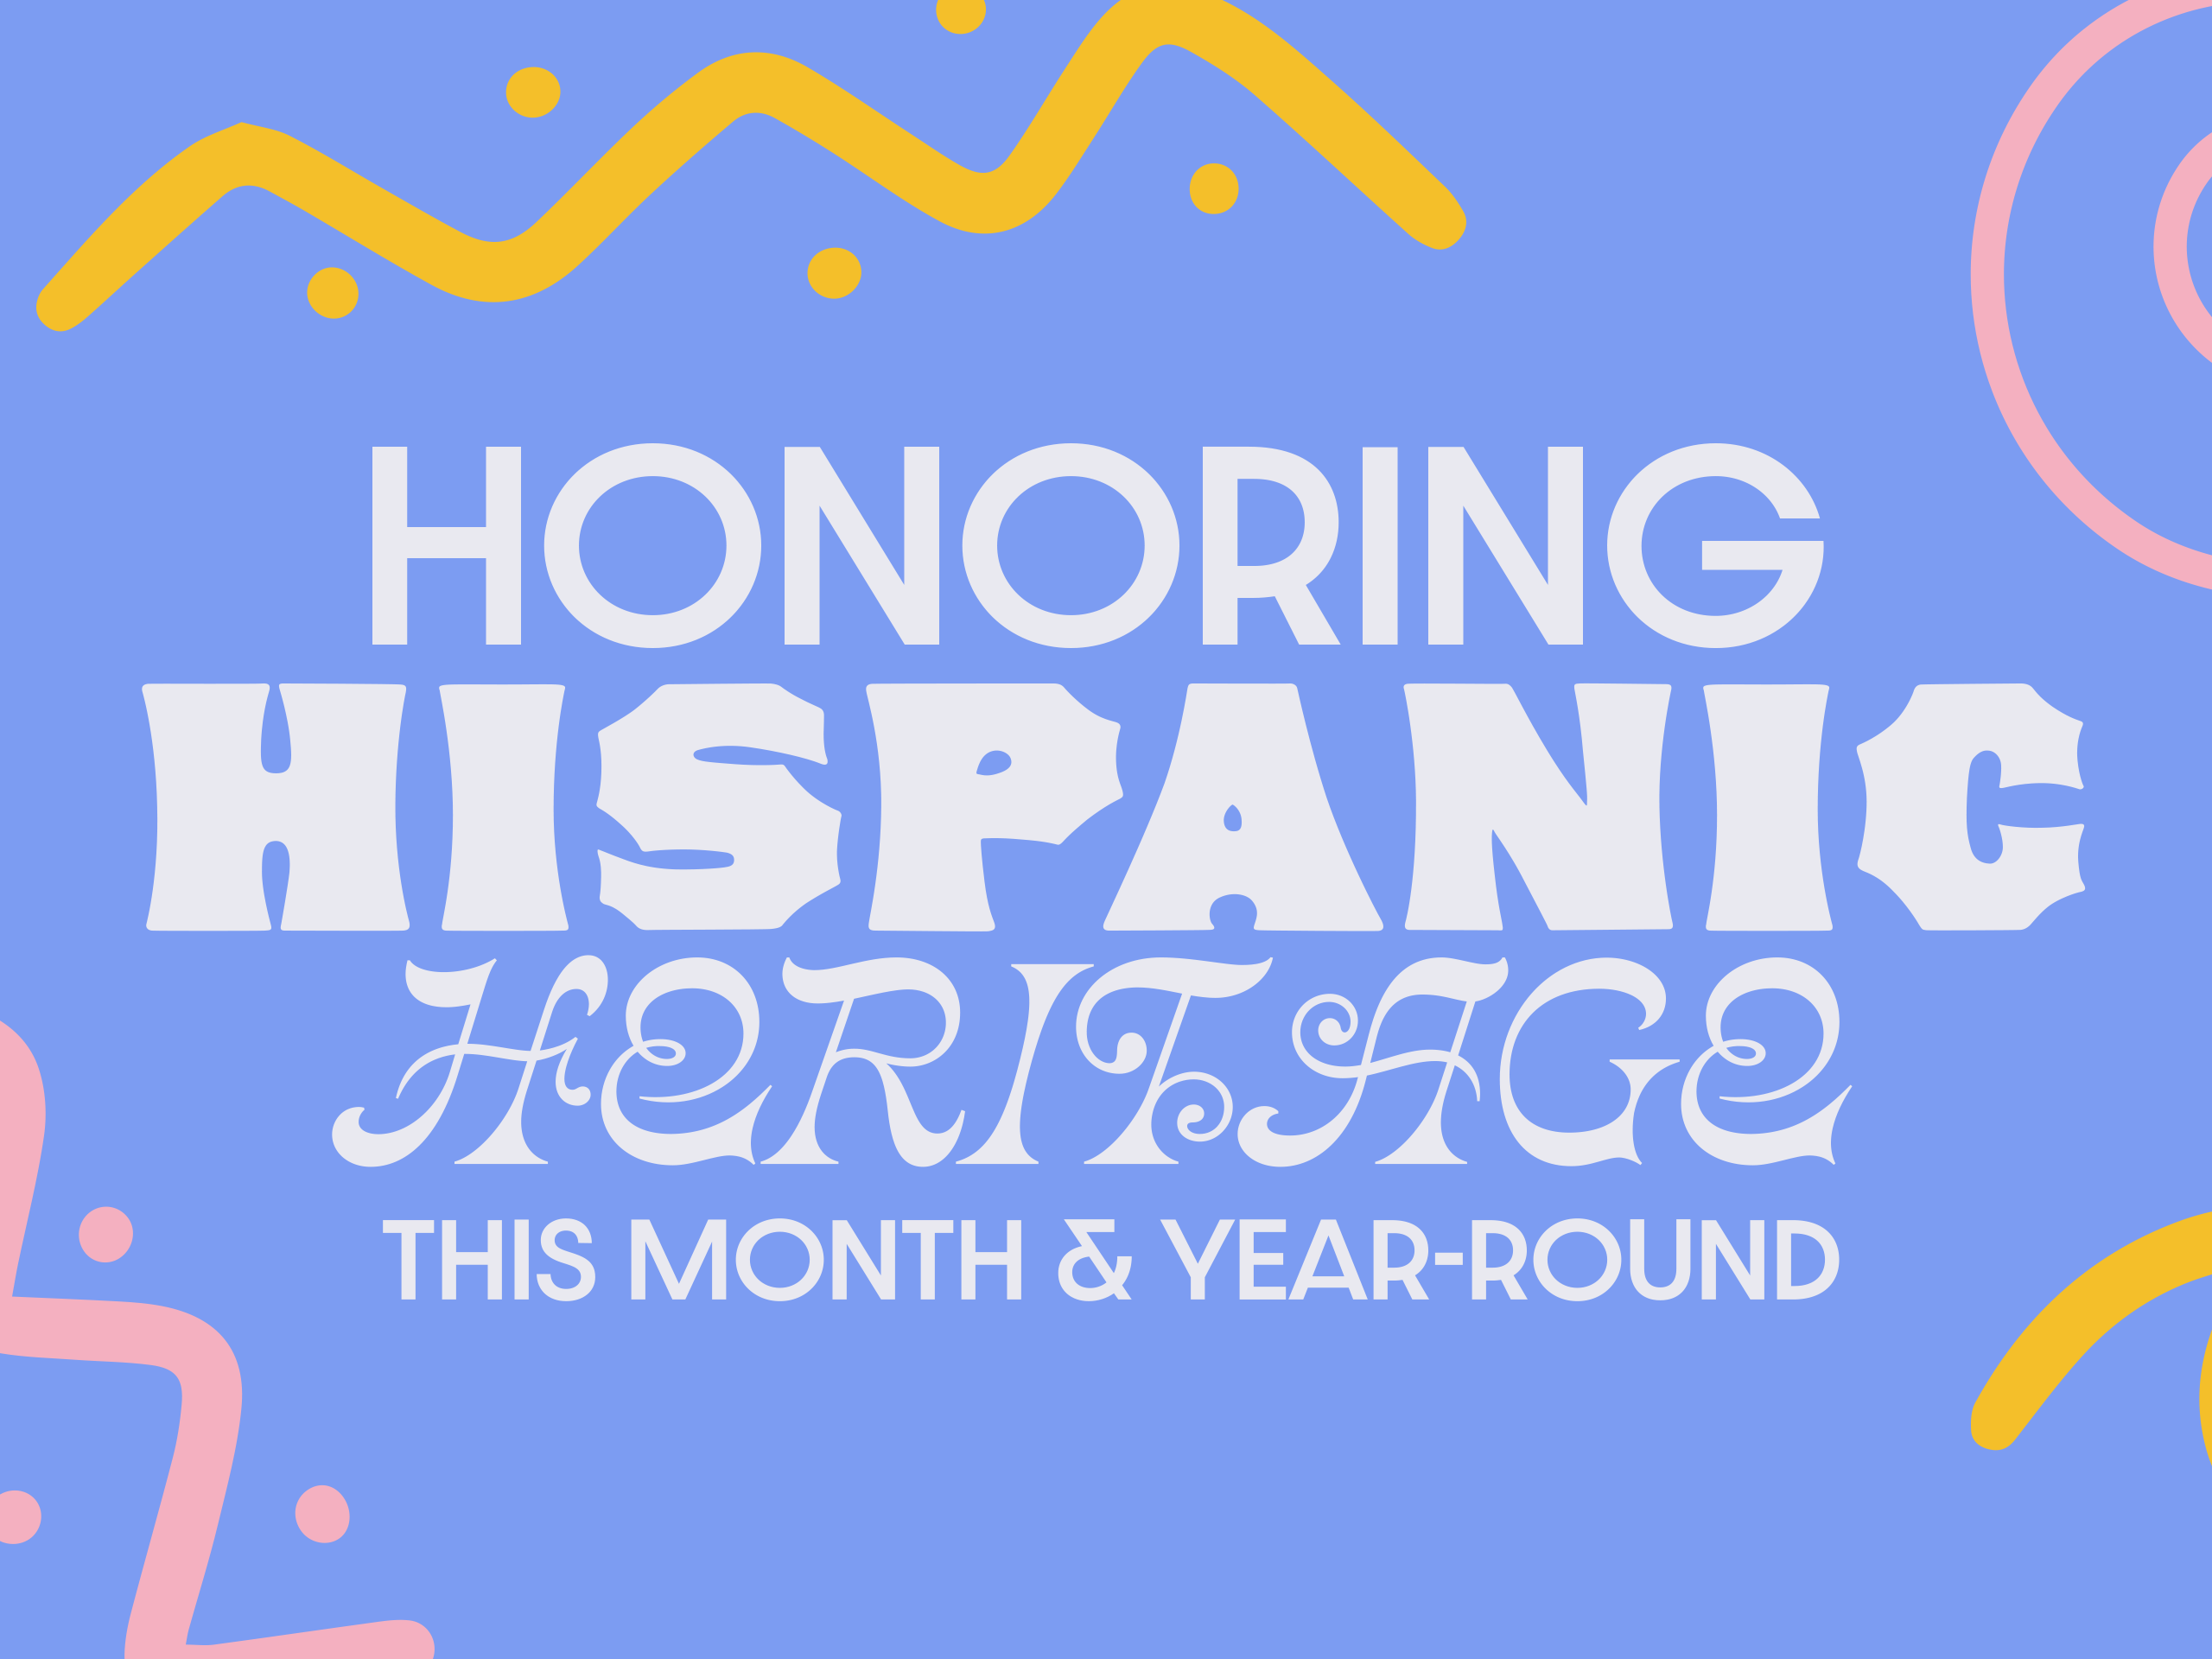 Hispanic heritage month header